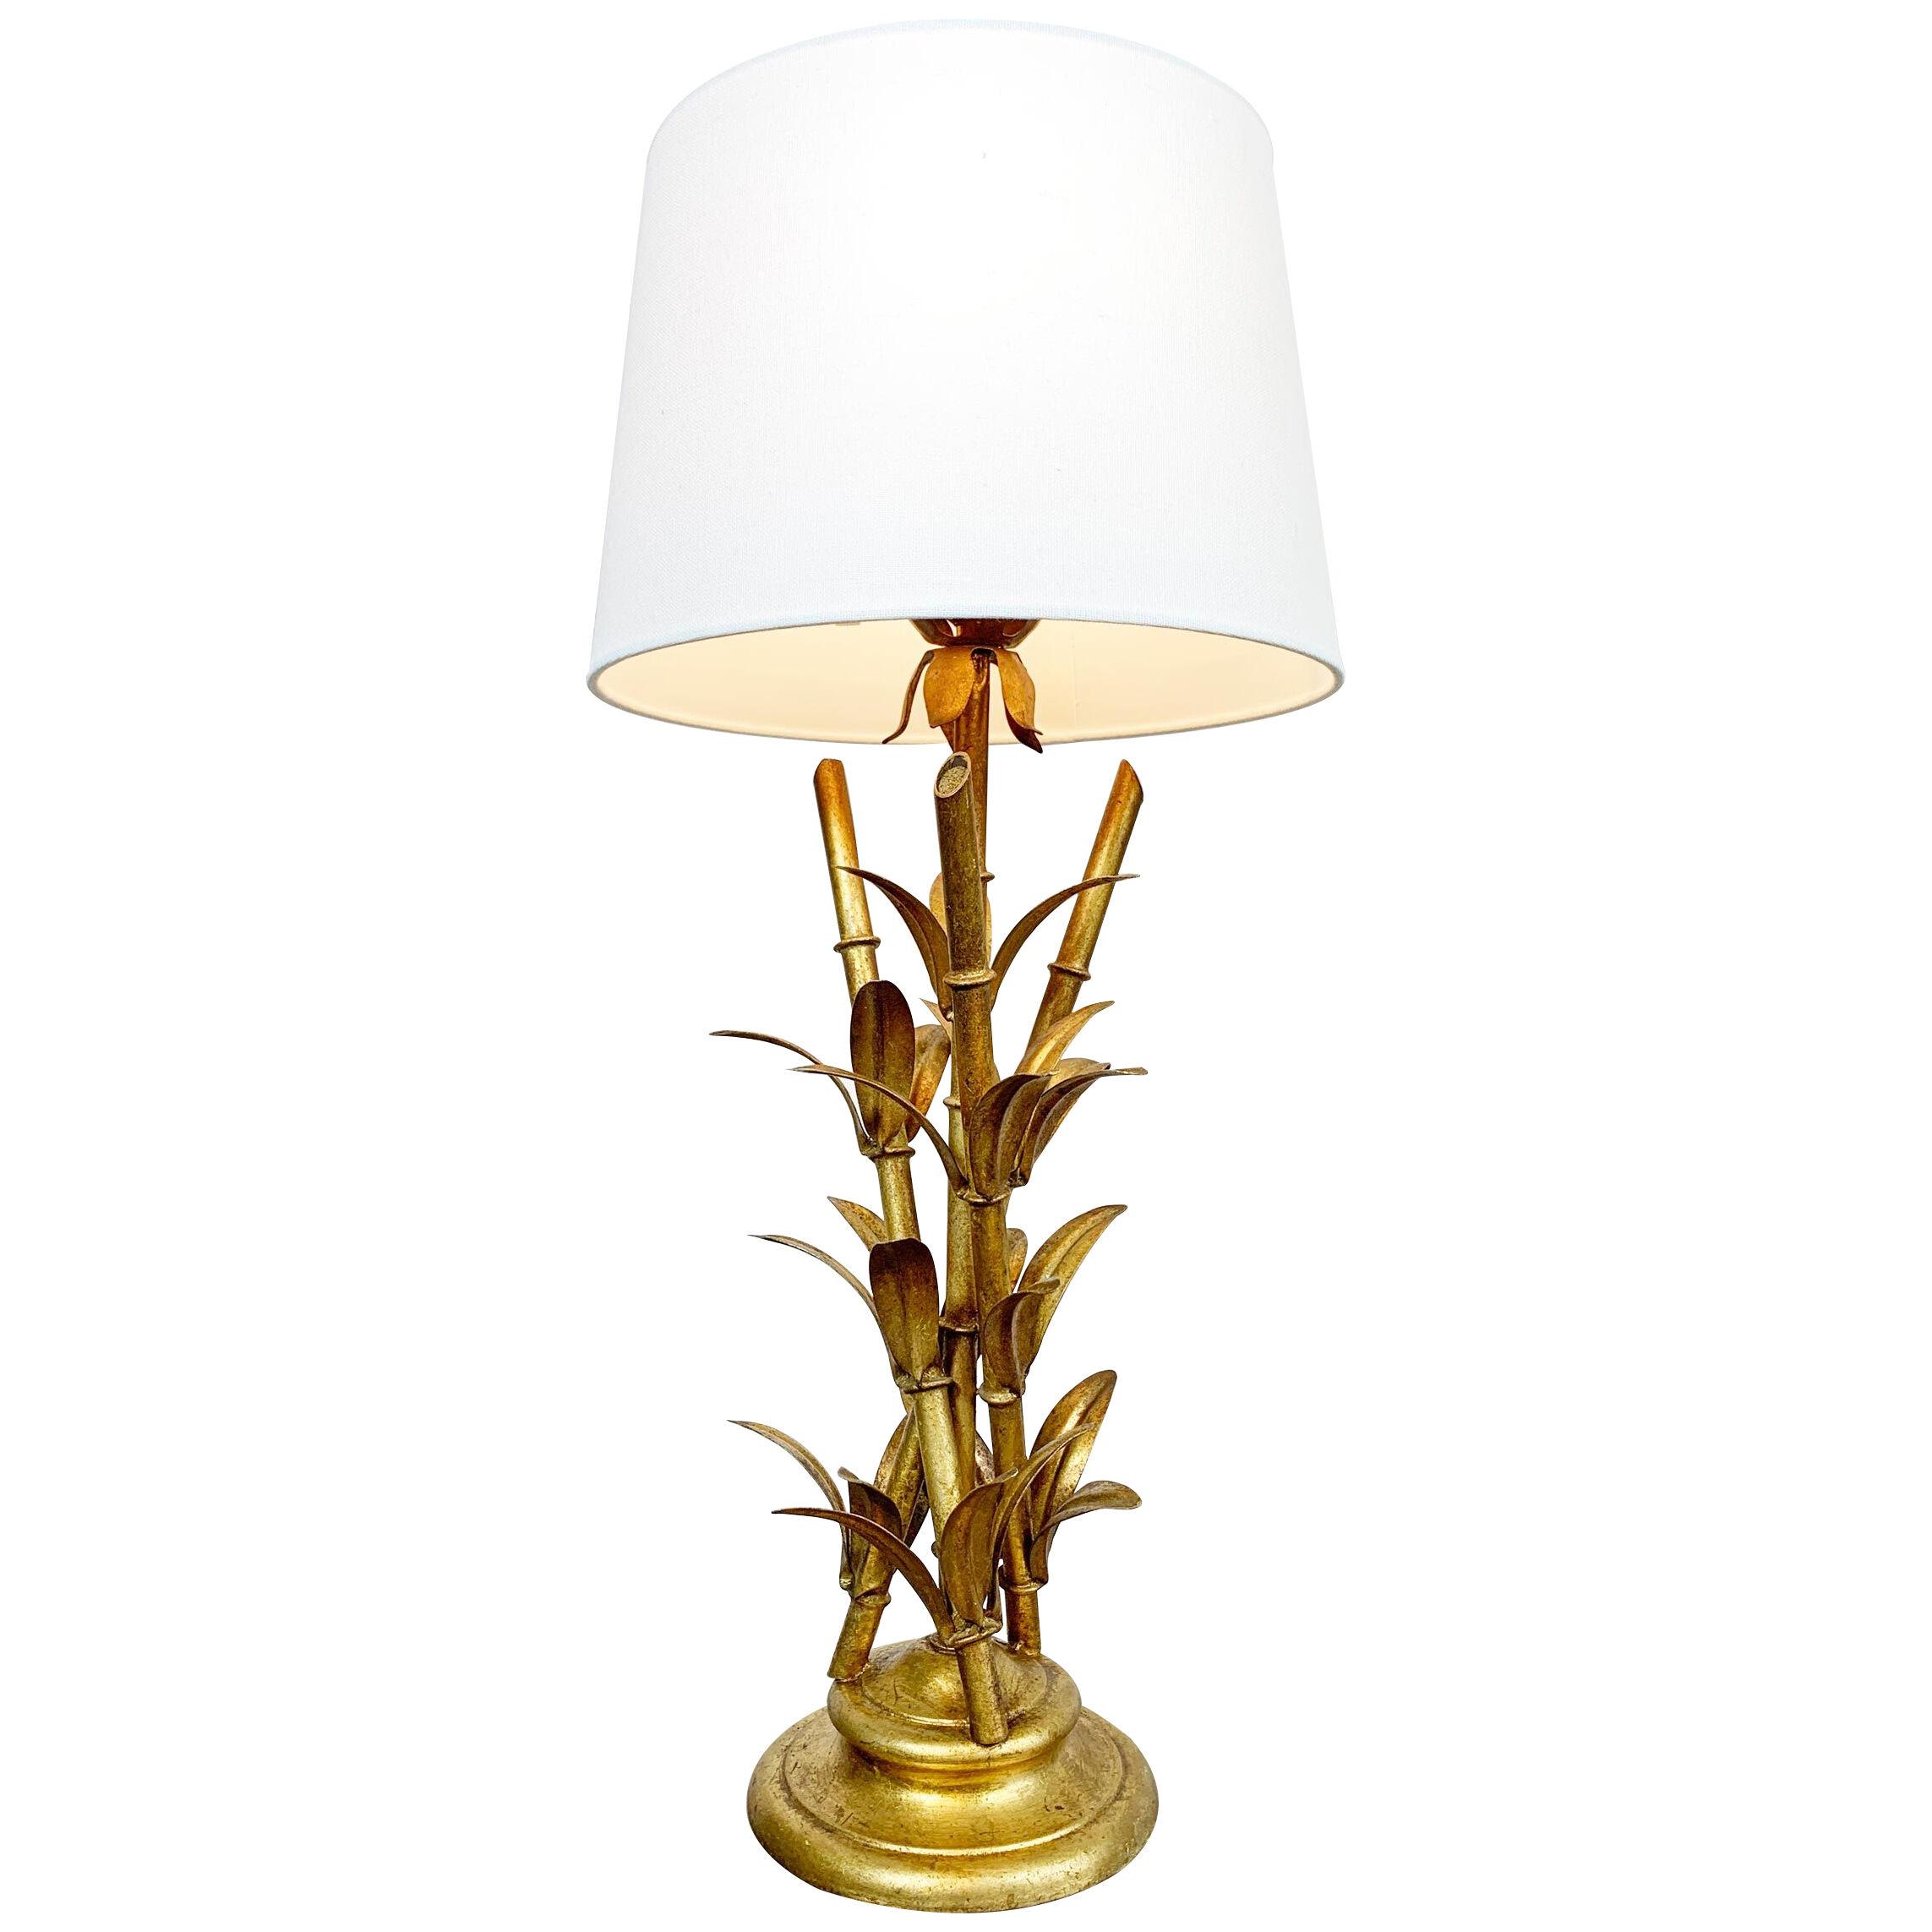  Italian Faux Bamboo Gilt Table Lamp 1950’s